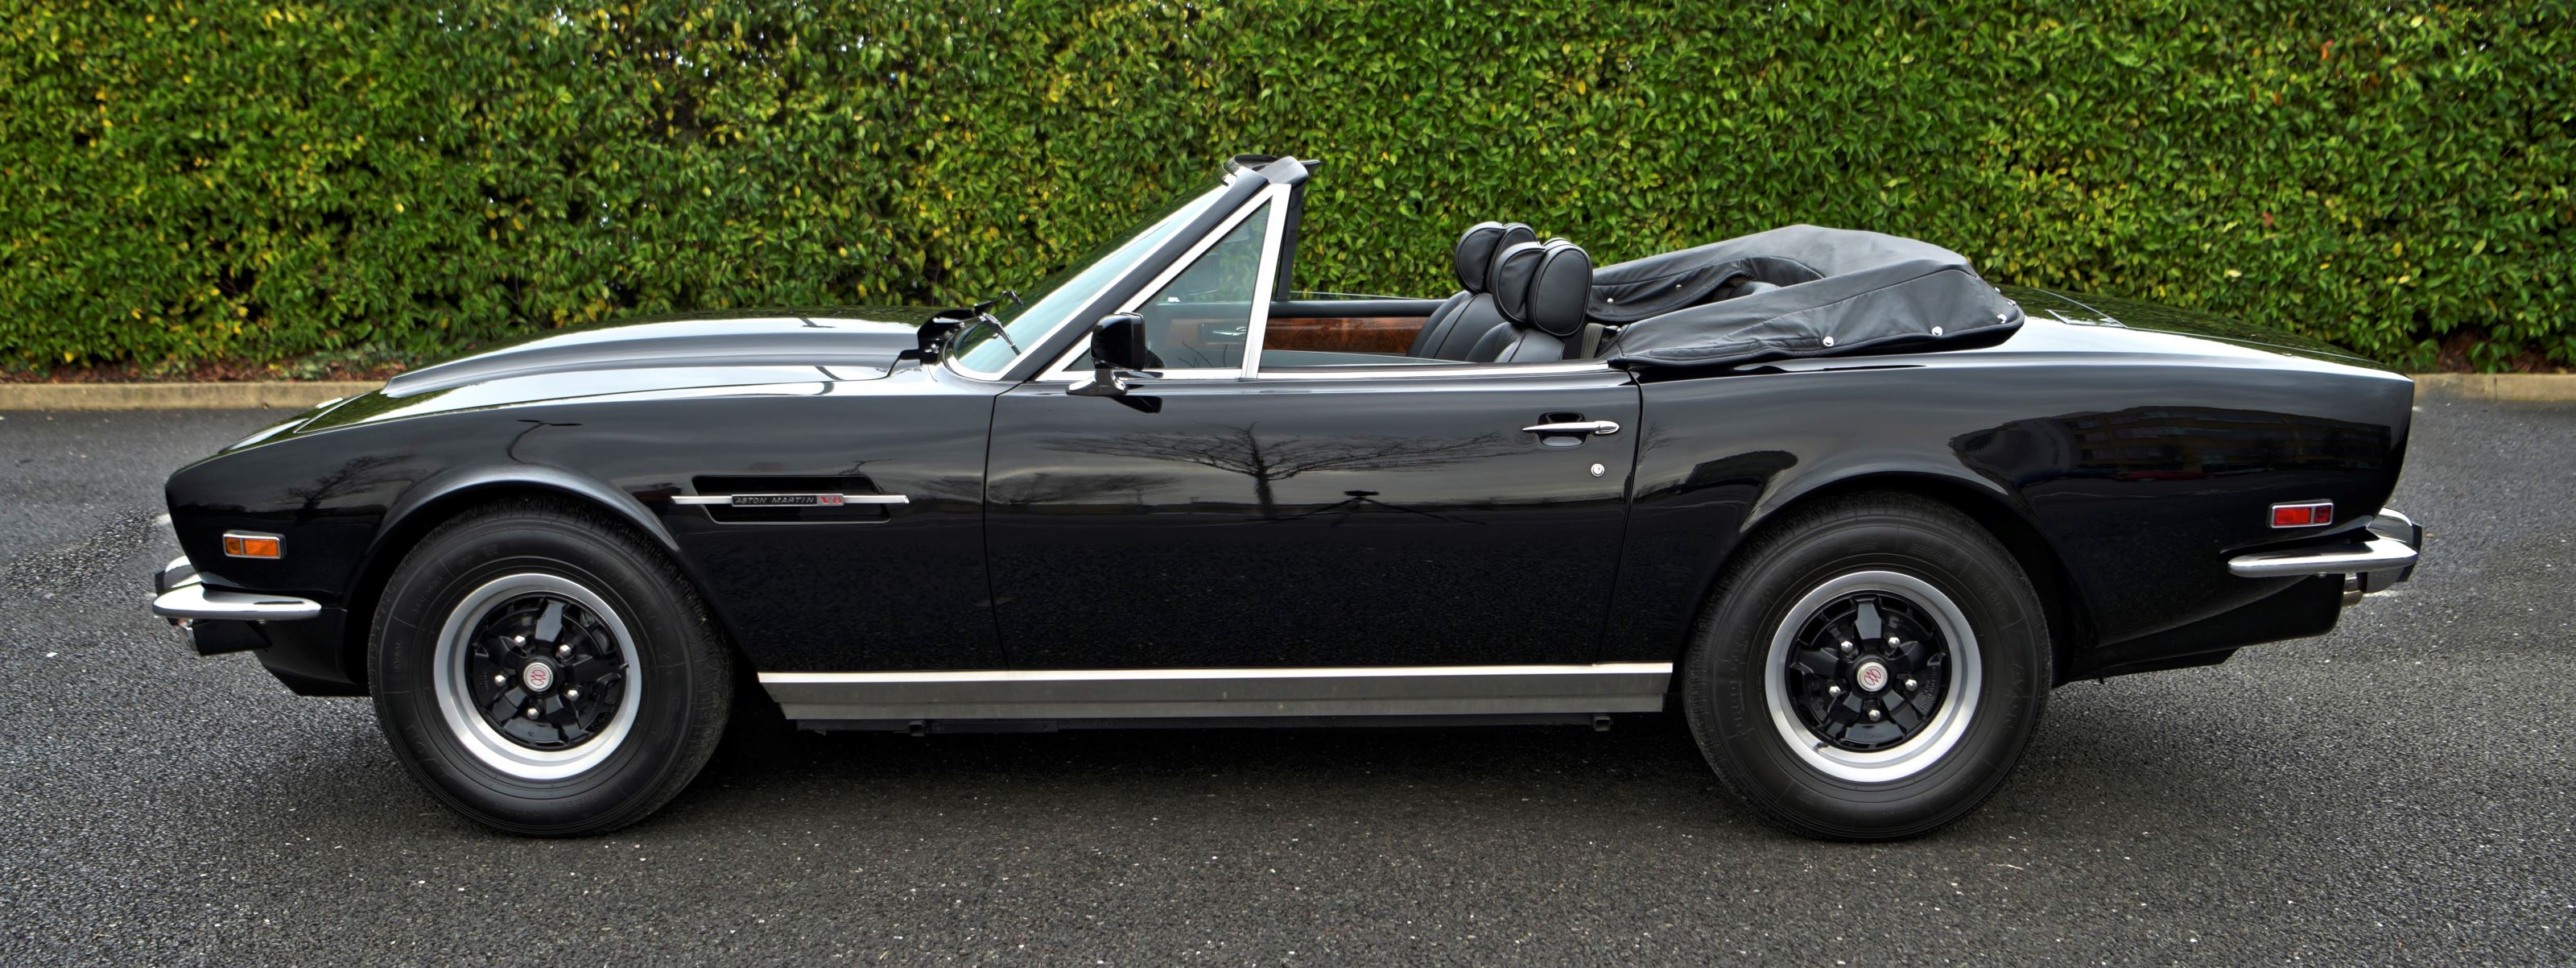 Aston martin v8  volante left hand drive automatic  pnpjedusq65fefv5yhq t